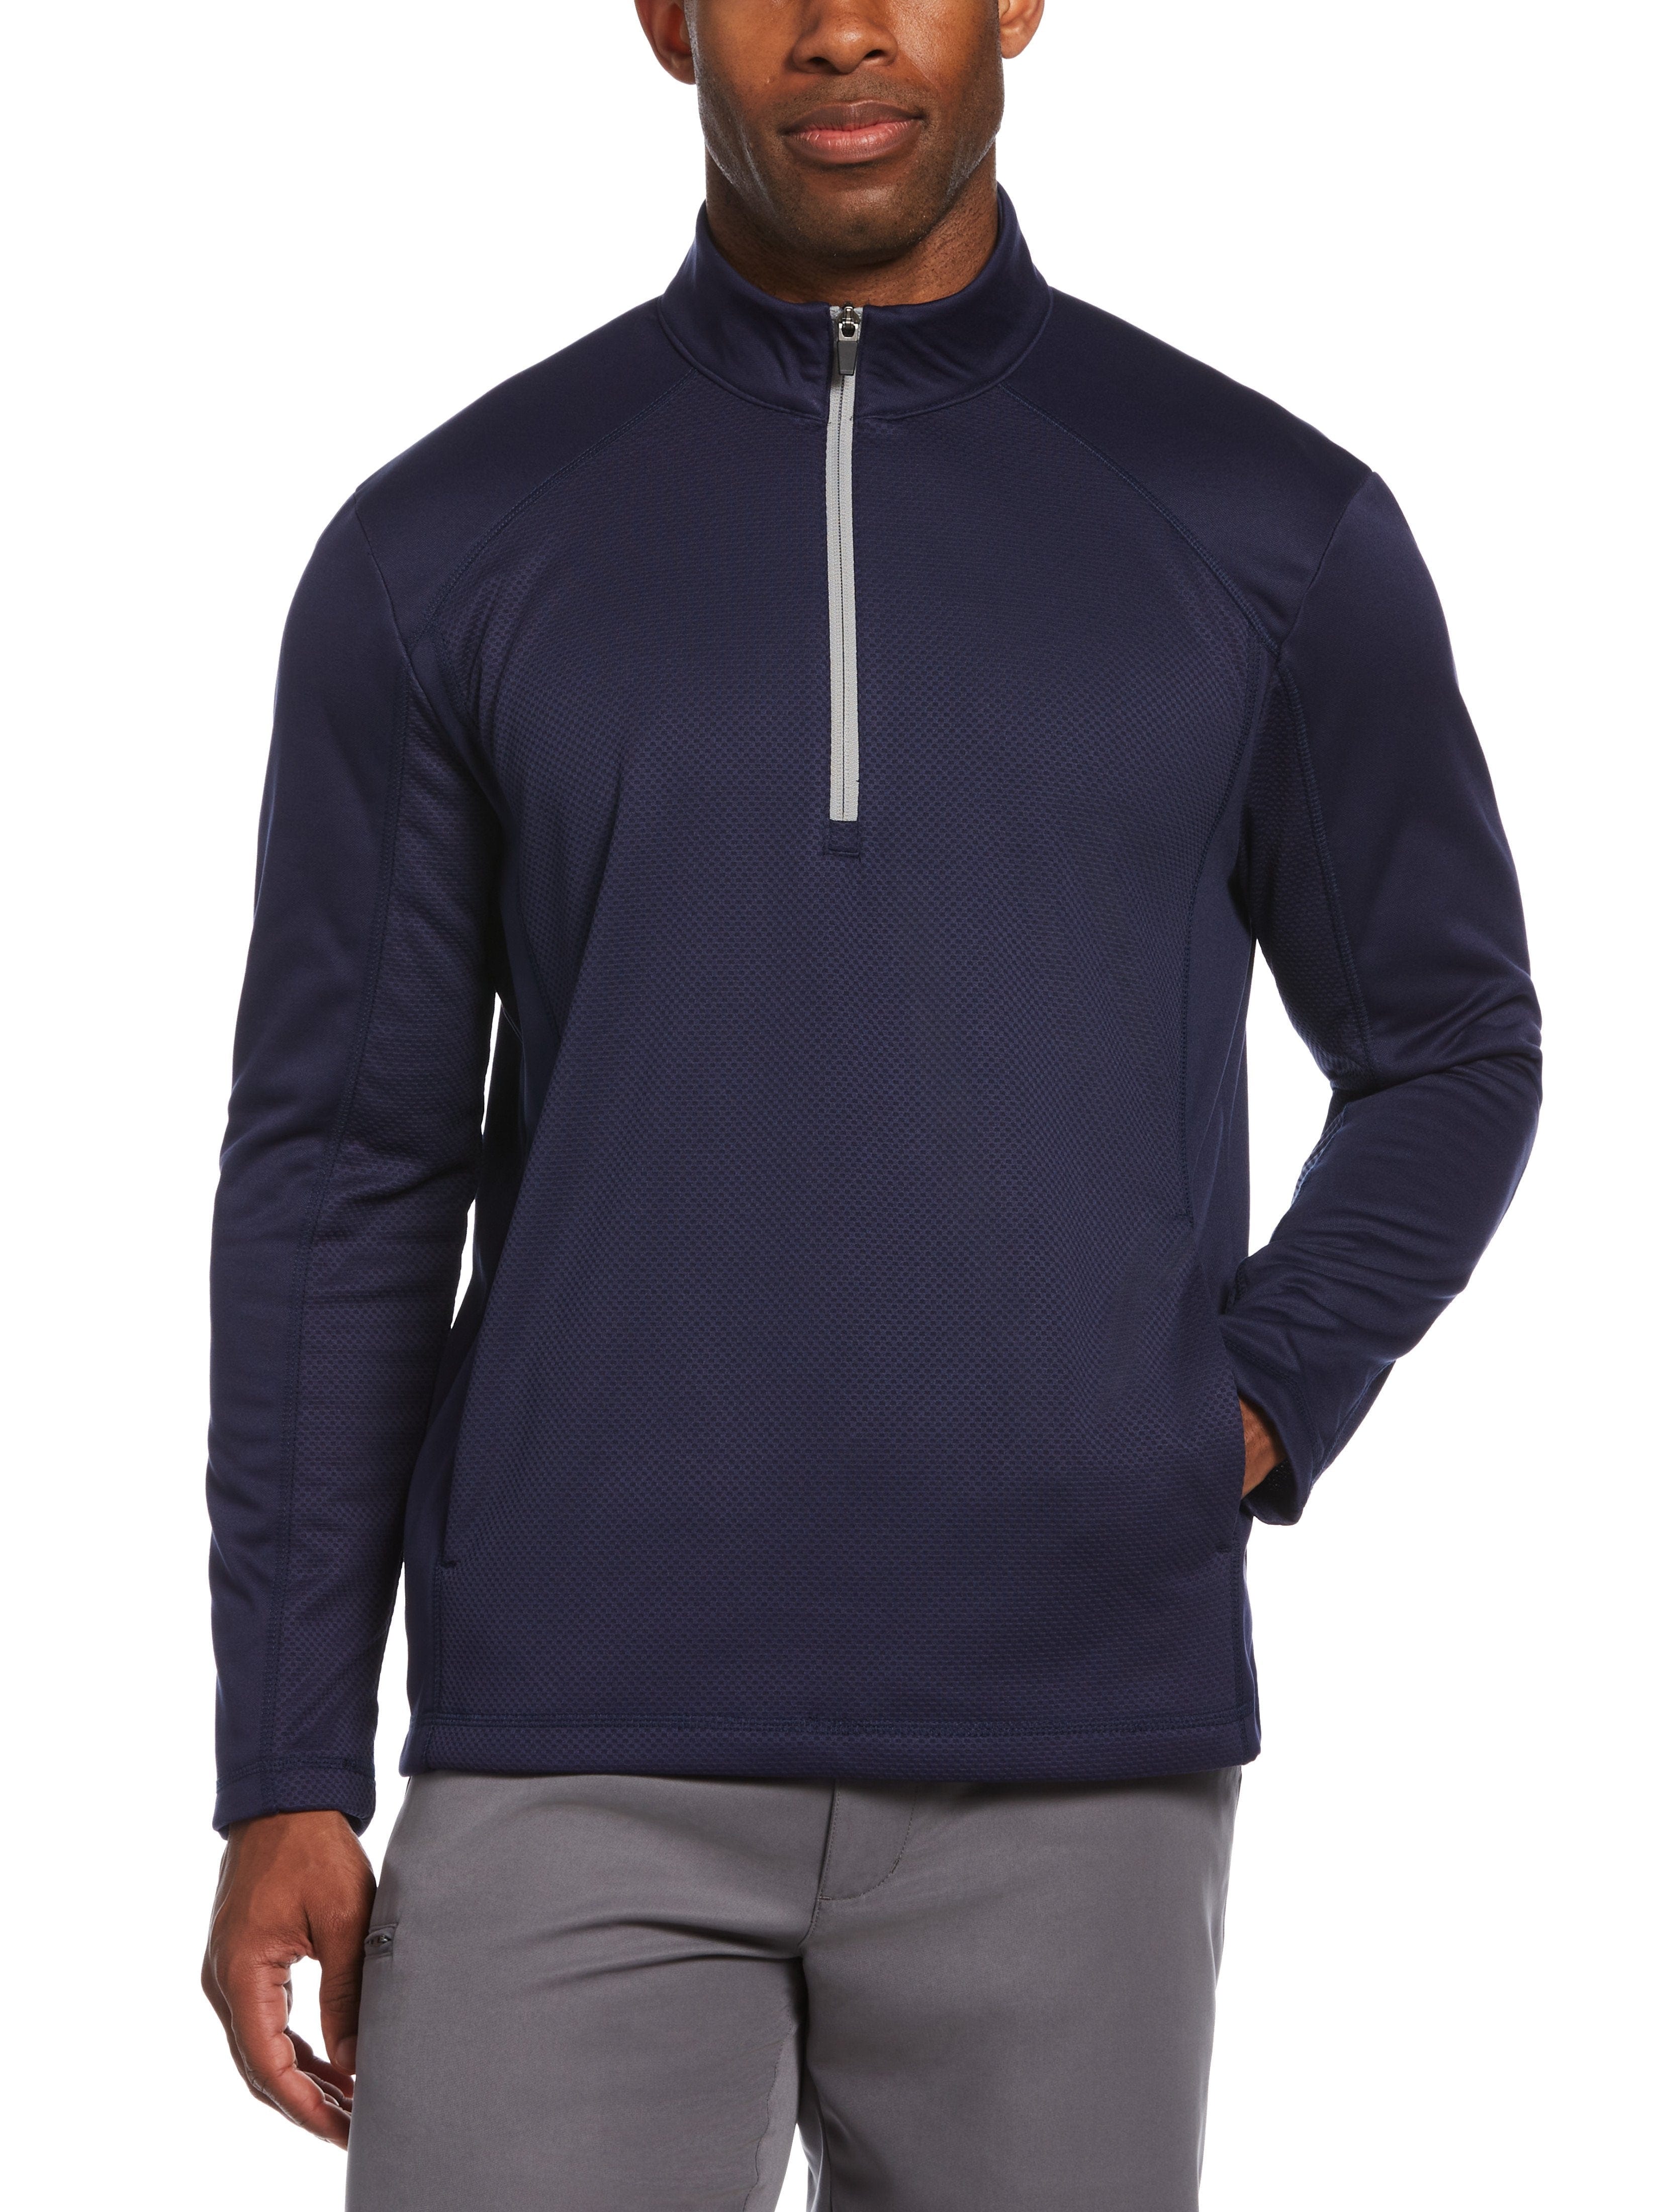 PGA TOUR Apparel Mens Mixed Texture Fleece 1/4 Zip Golf Jacket Top, Size Large, Navy Blue, 100% Polyester | Golf Apparel Shop